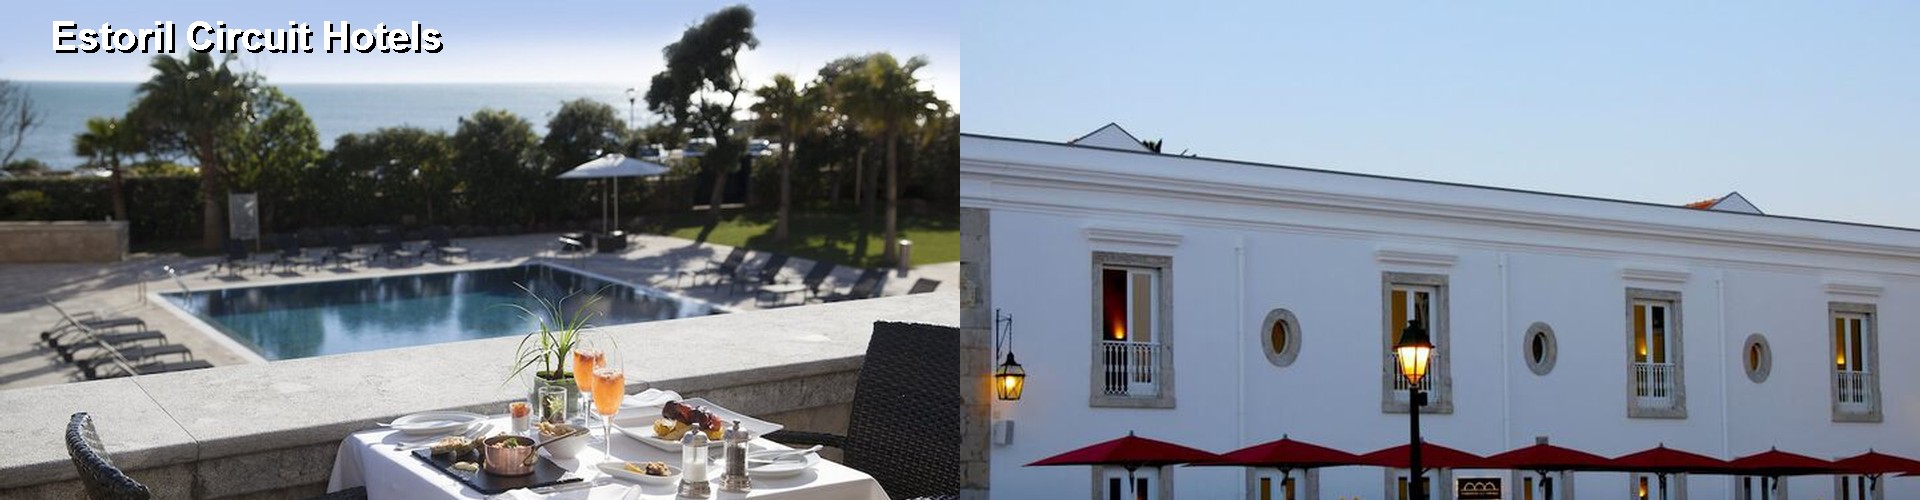 5 Best Hotels near Estoril Circuit